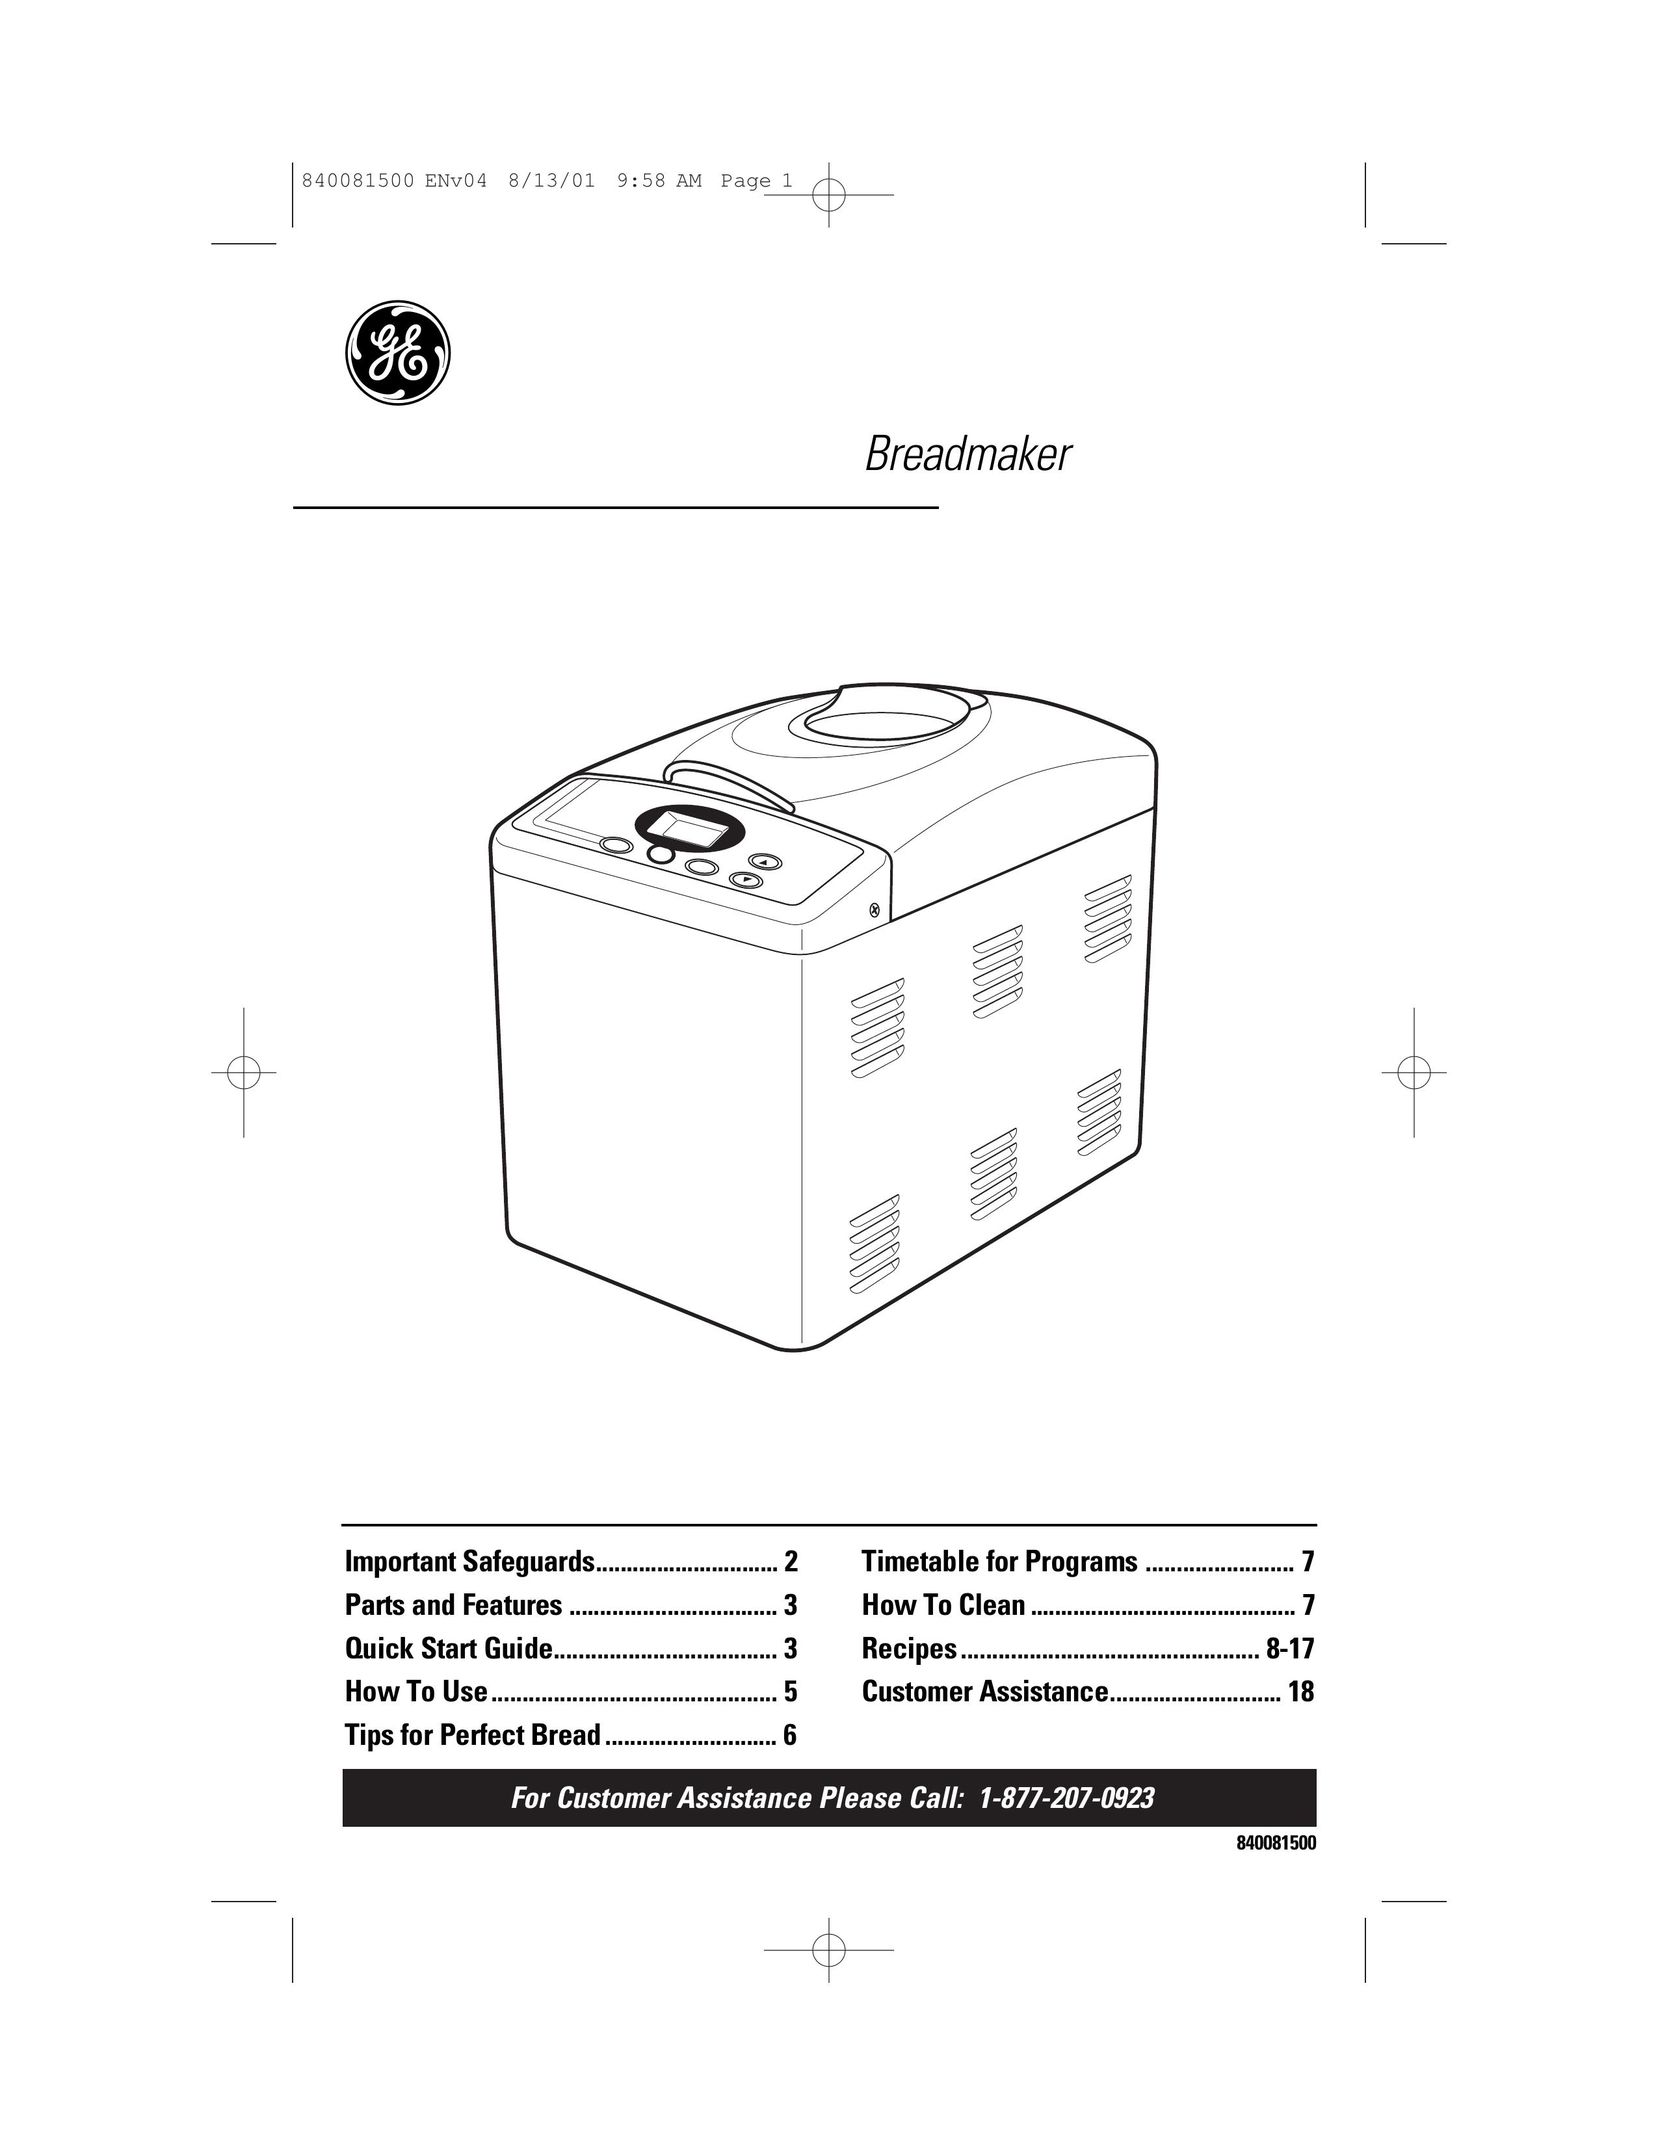 GE 840081500 Bread Maker User Manual